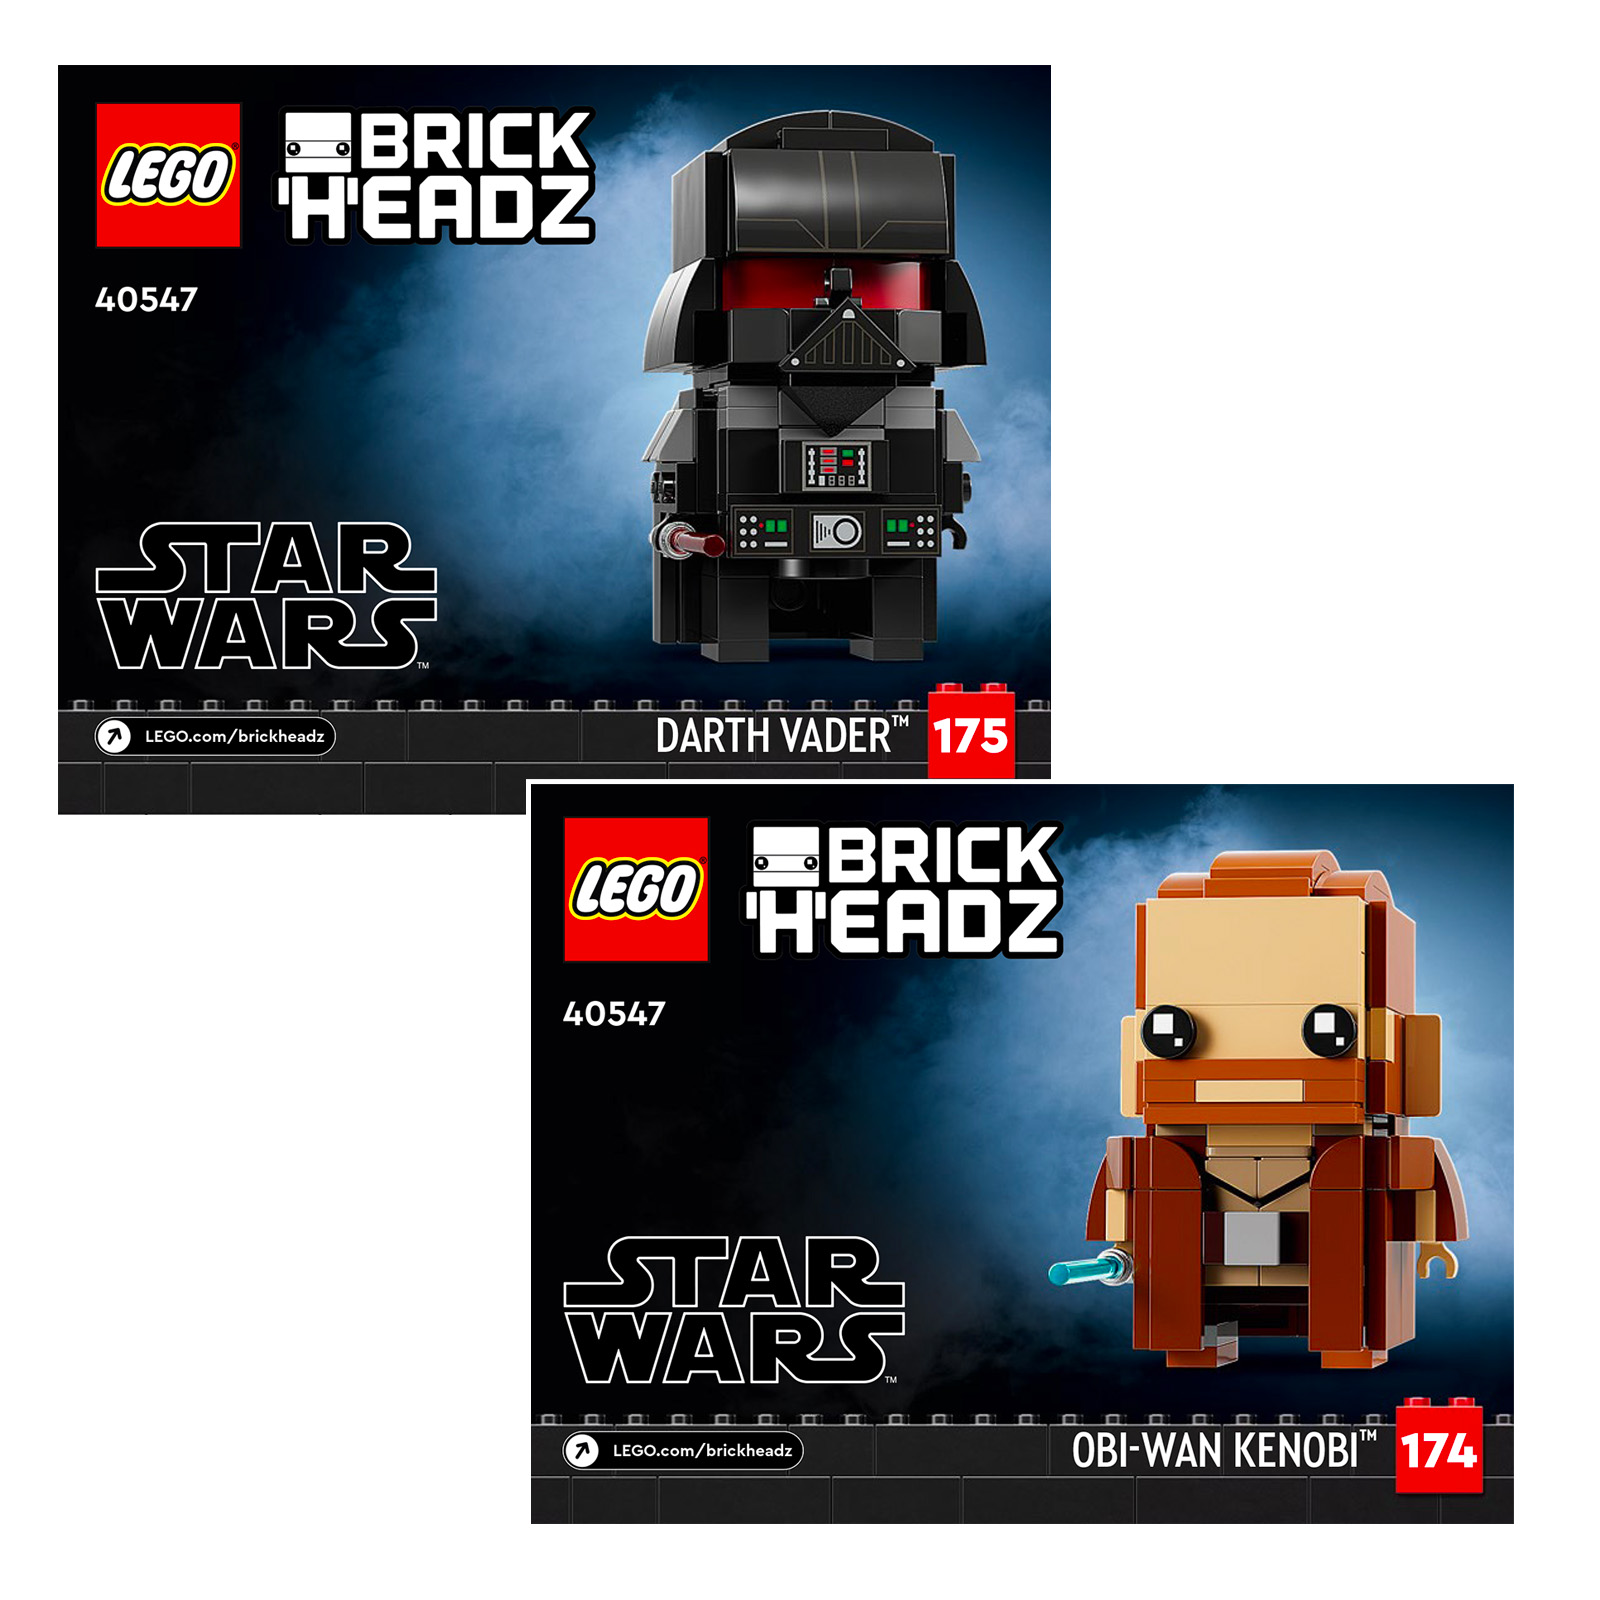 LEGO Star Wars BrickHeadz 40547 Obi-Wan Kenobi i Darth Vader: Prvi vizualni prikazi